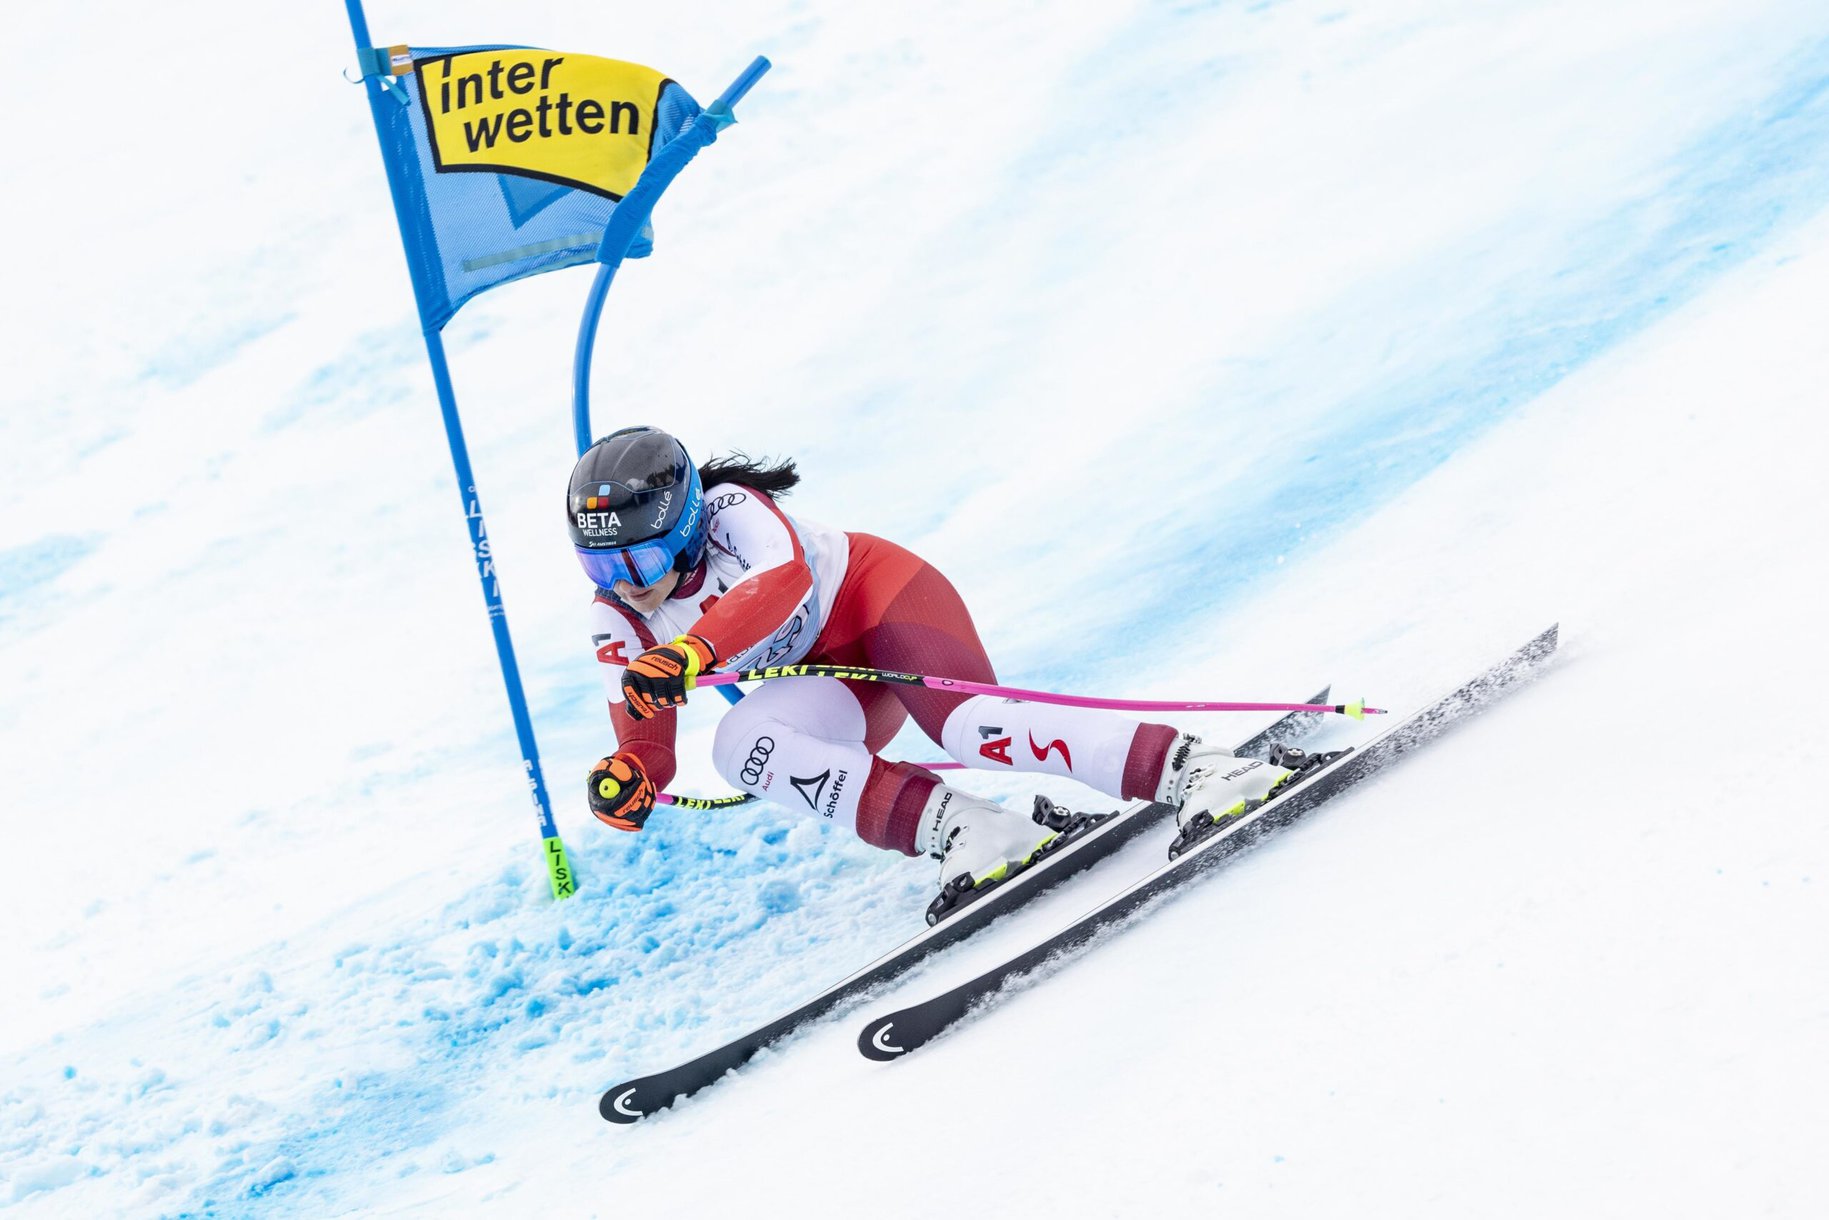 SANKT ANTON,AUSTRIA,15.JAN.23 - ALPINE SKIING - FIS World Cup, Super G, ladies. Image shows Stephanie Venier (AUT). Photo: GEPA pictures/ Patrick Steiner